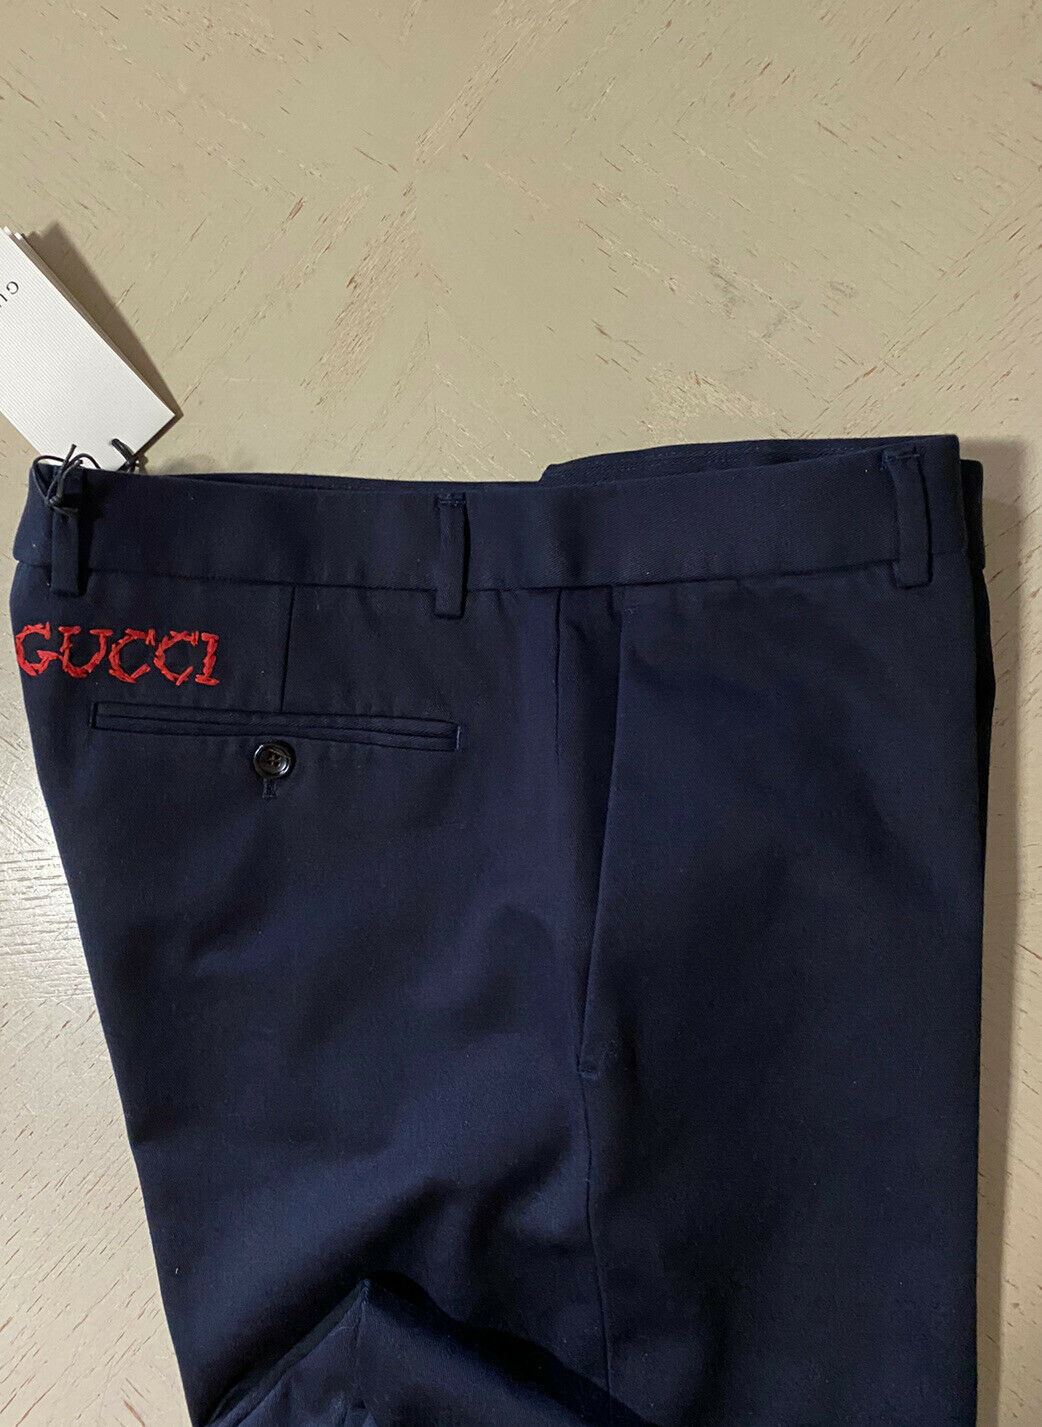 Neu mit Etikett: Gucci Herren-Anzughose, Marineblau, 36 US-Italien